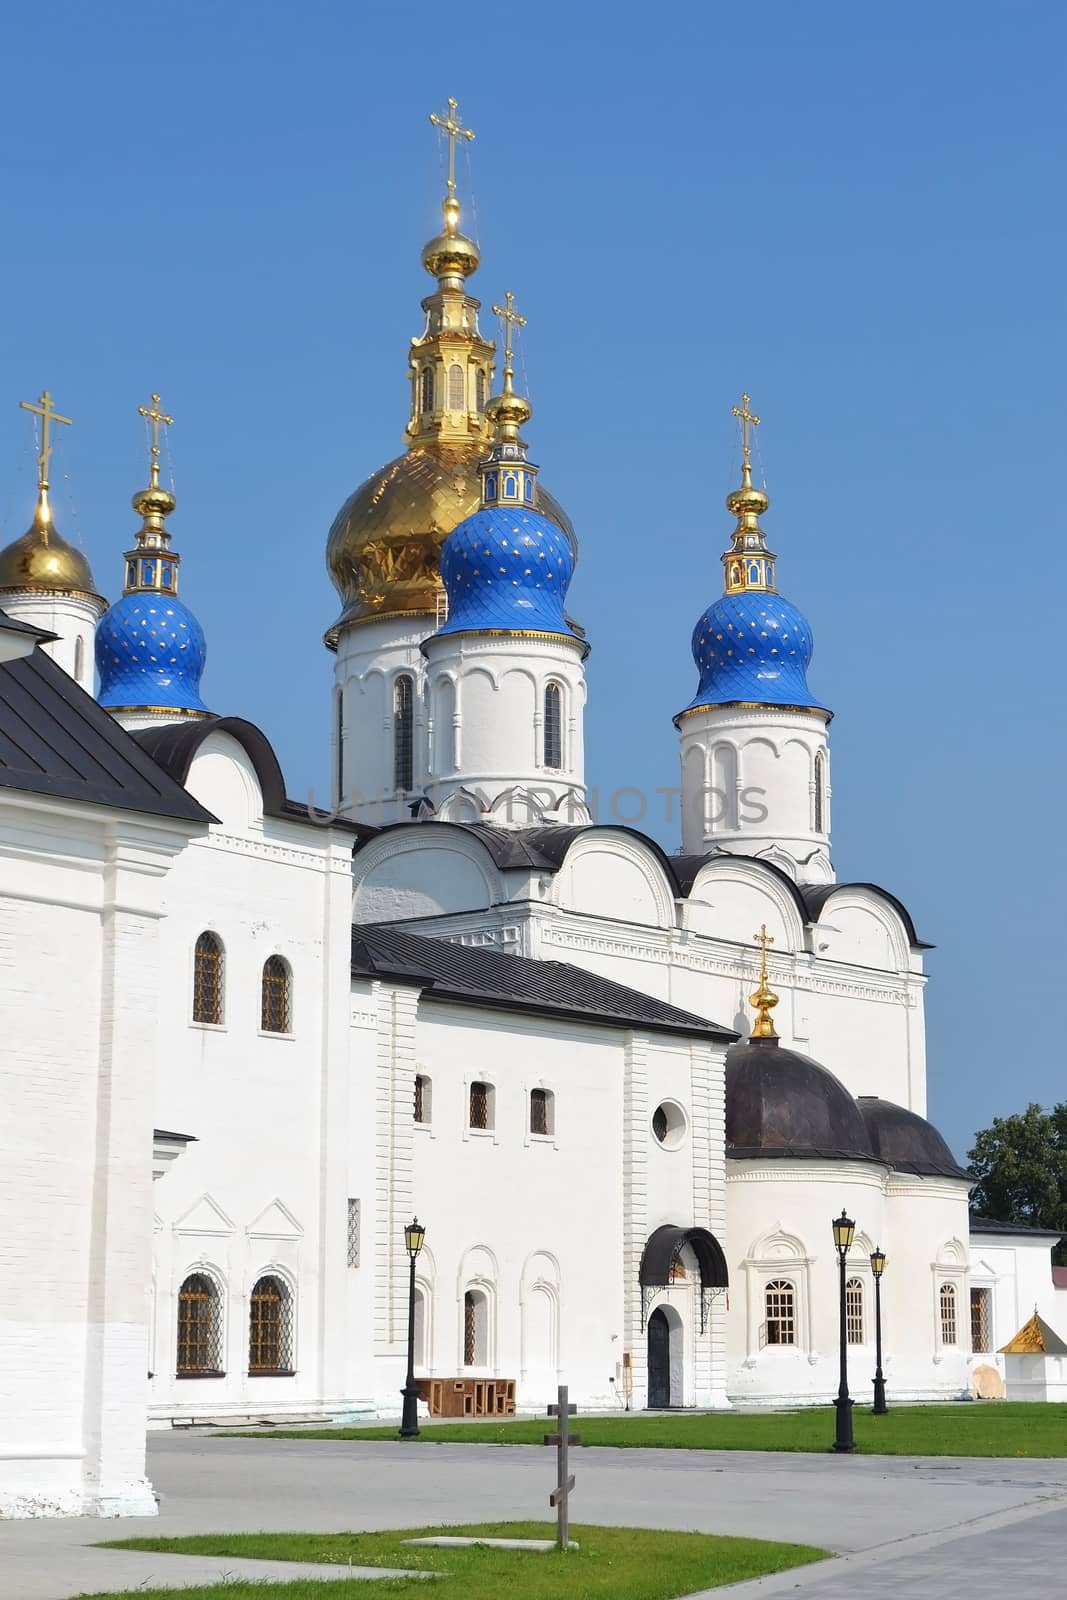 Sofia Assumption Cathedral of the Tobolsk Kremlin, Russia. by veronka72